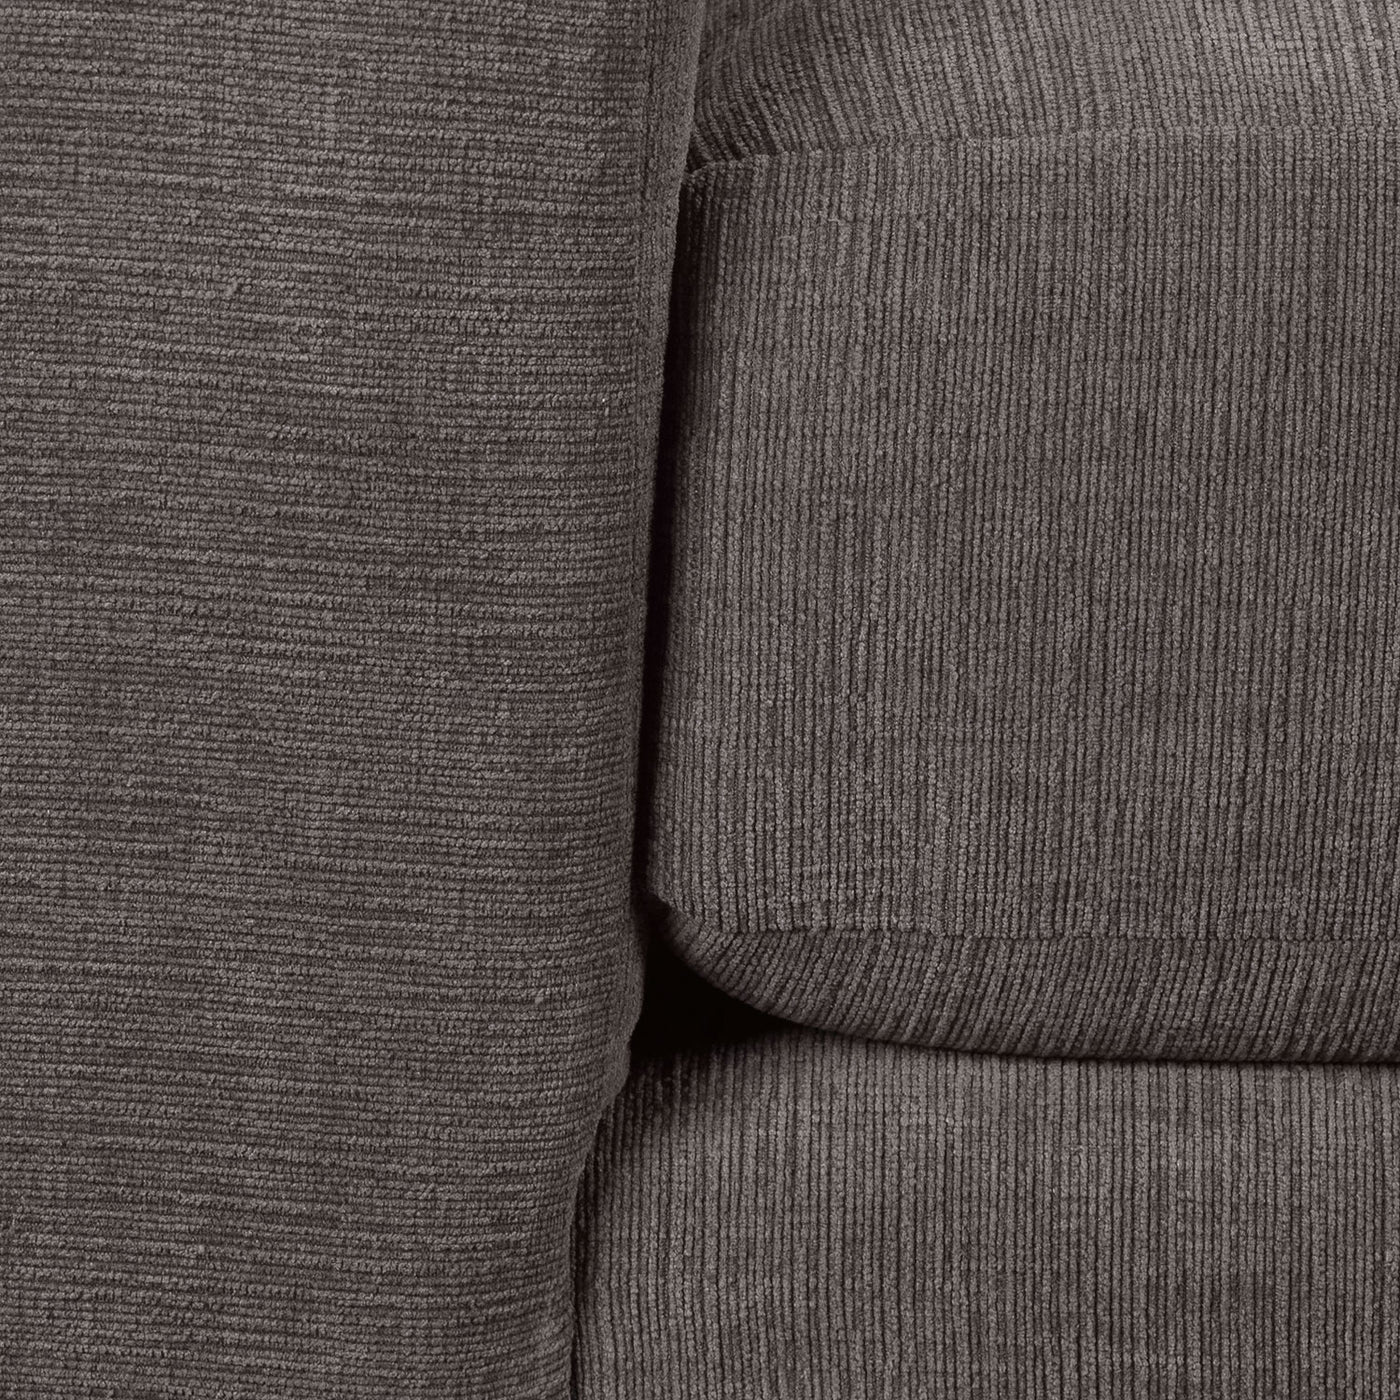 Fava Sofa - Grey